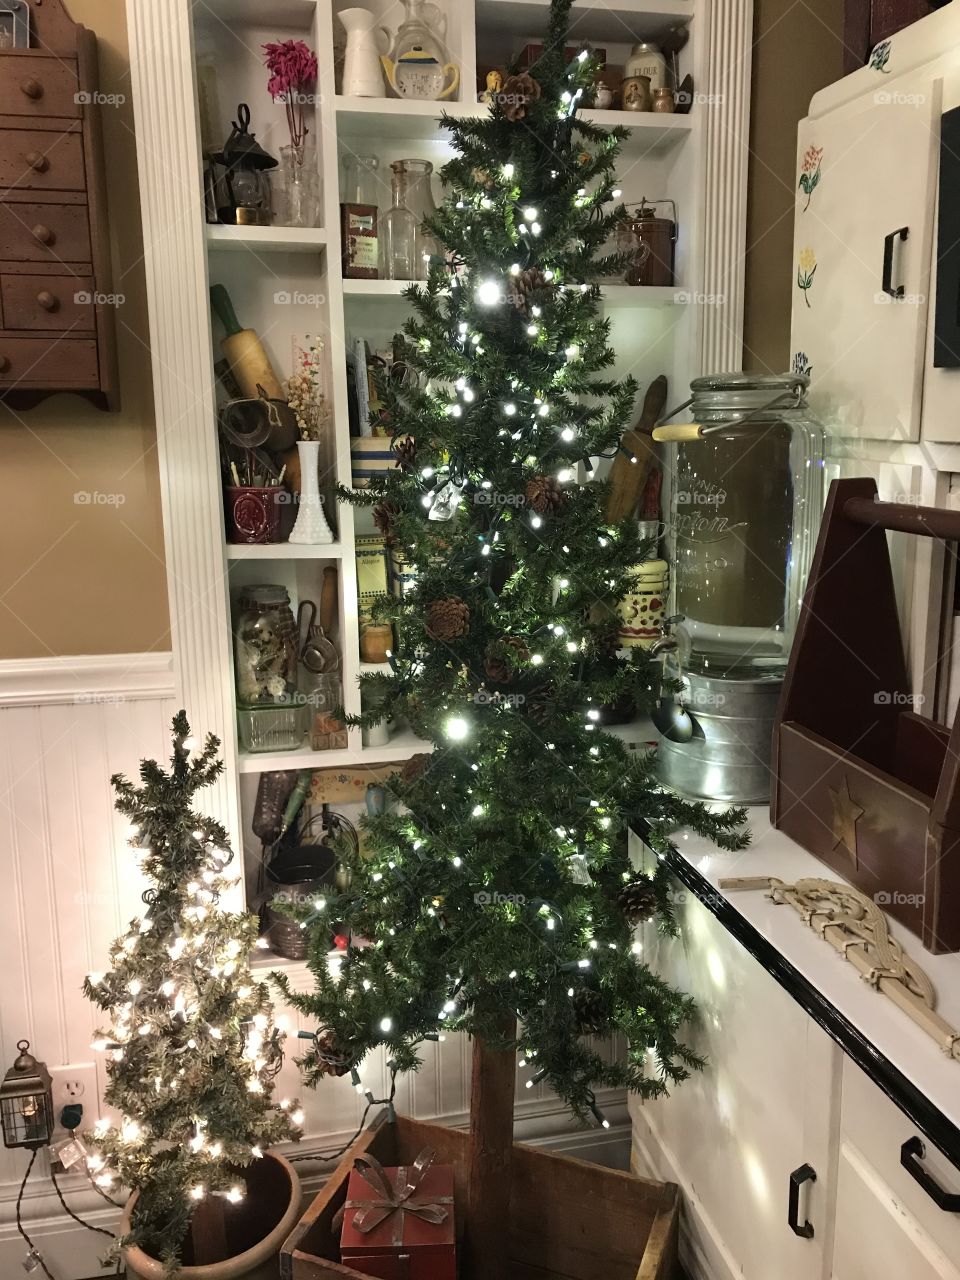 Kitchen Christmas decorations 